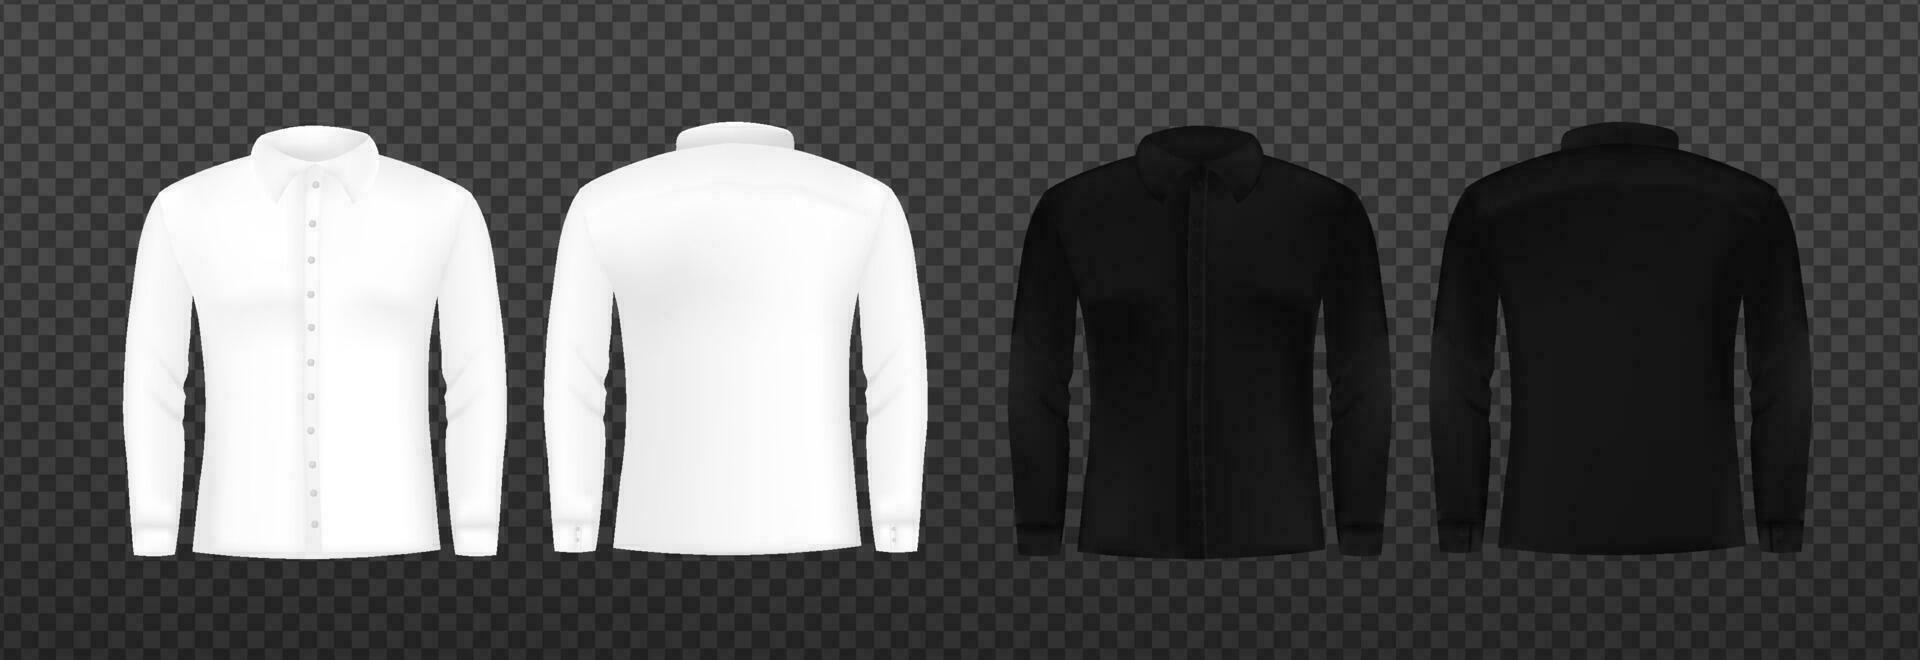 White and black shirt long sleeve template.  Shirt mockup blank vector